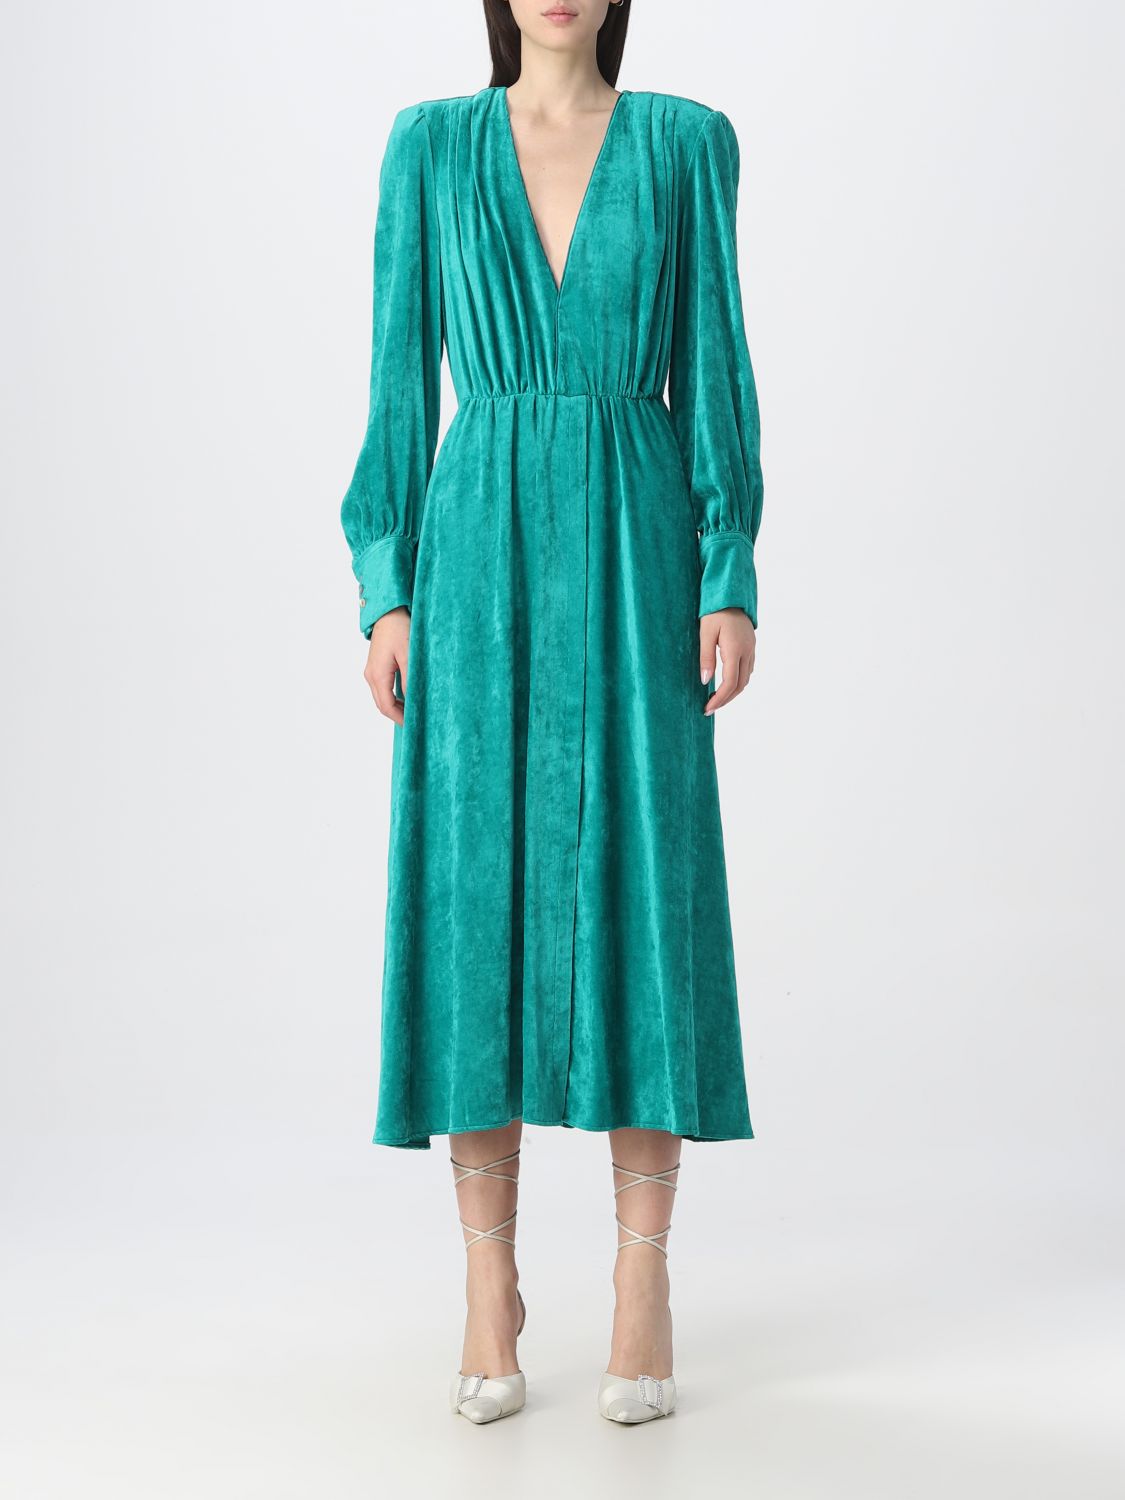 FORTE FORTE: dress for woman - Emerald | Forte Forte dress 9355 online ...